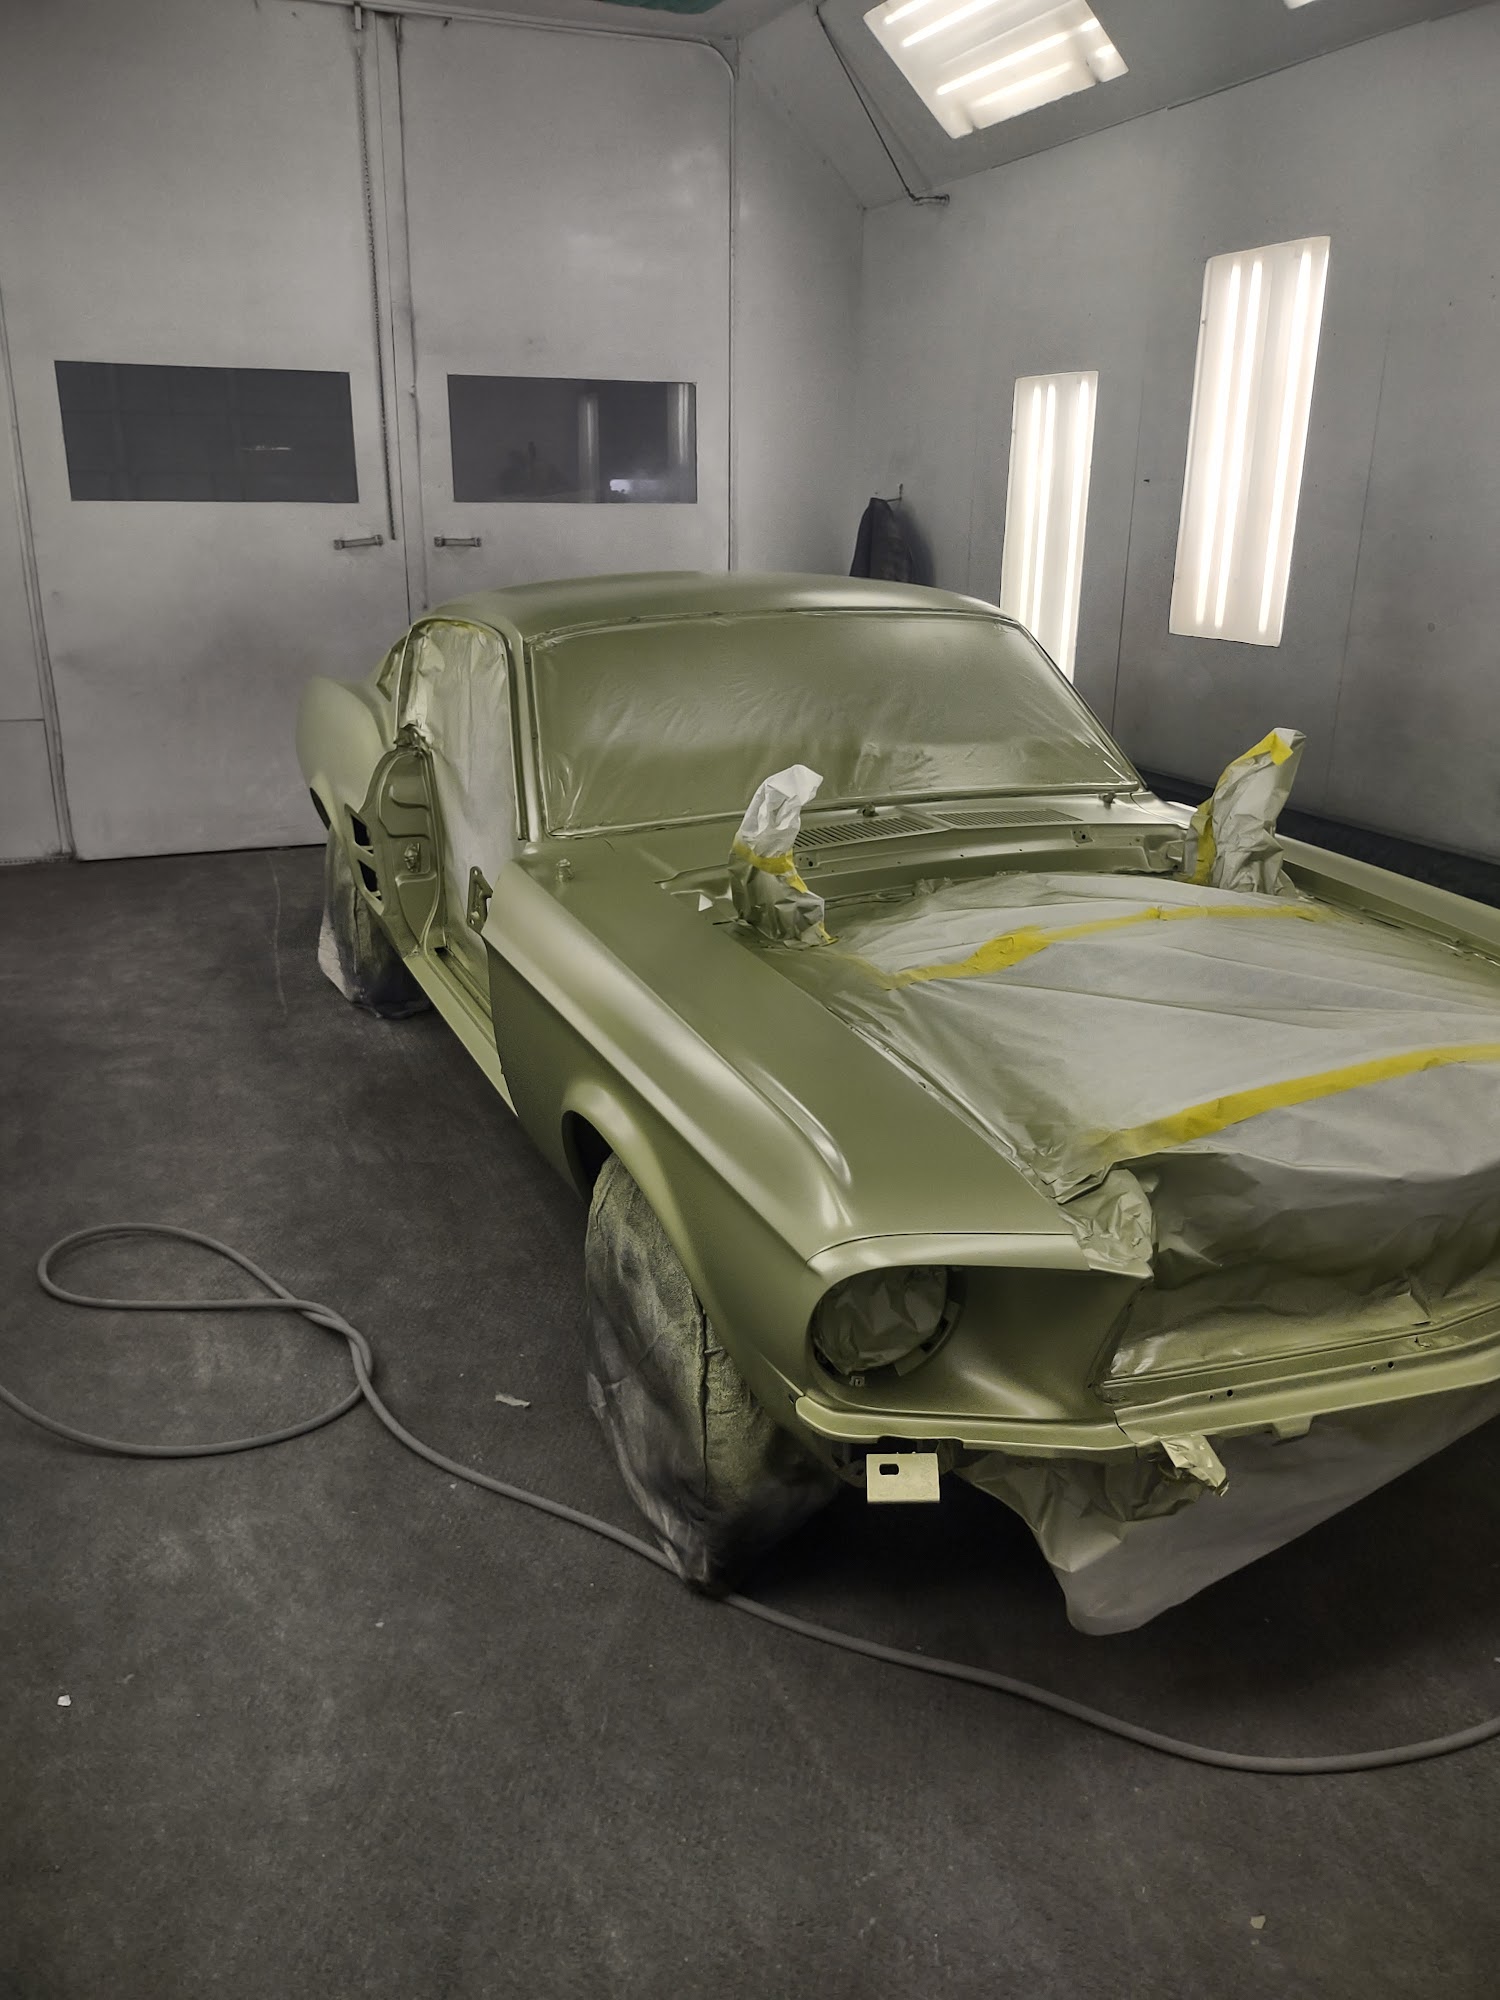 Hammersla's Autobody and Restorations